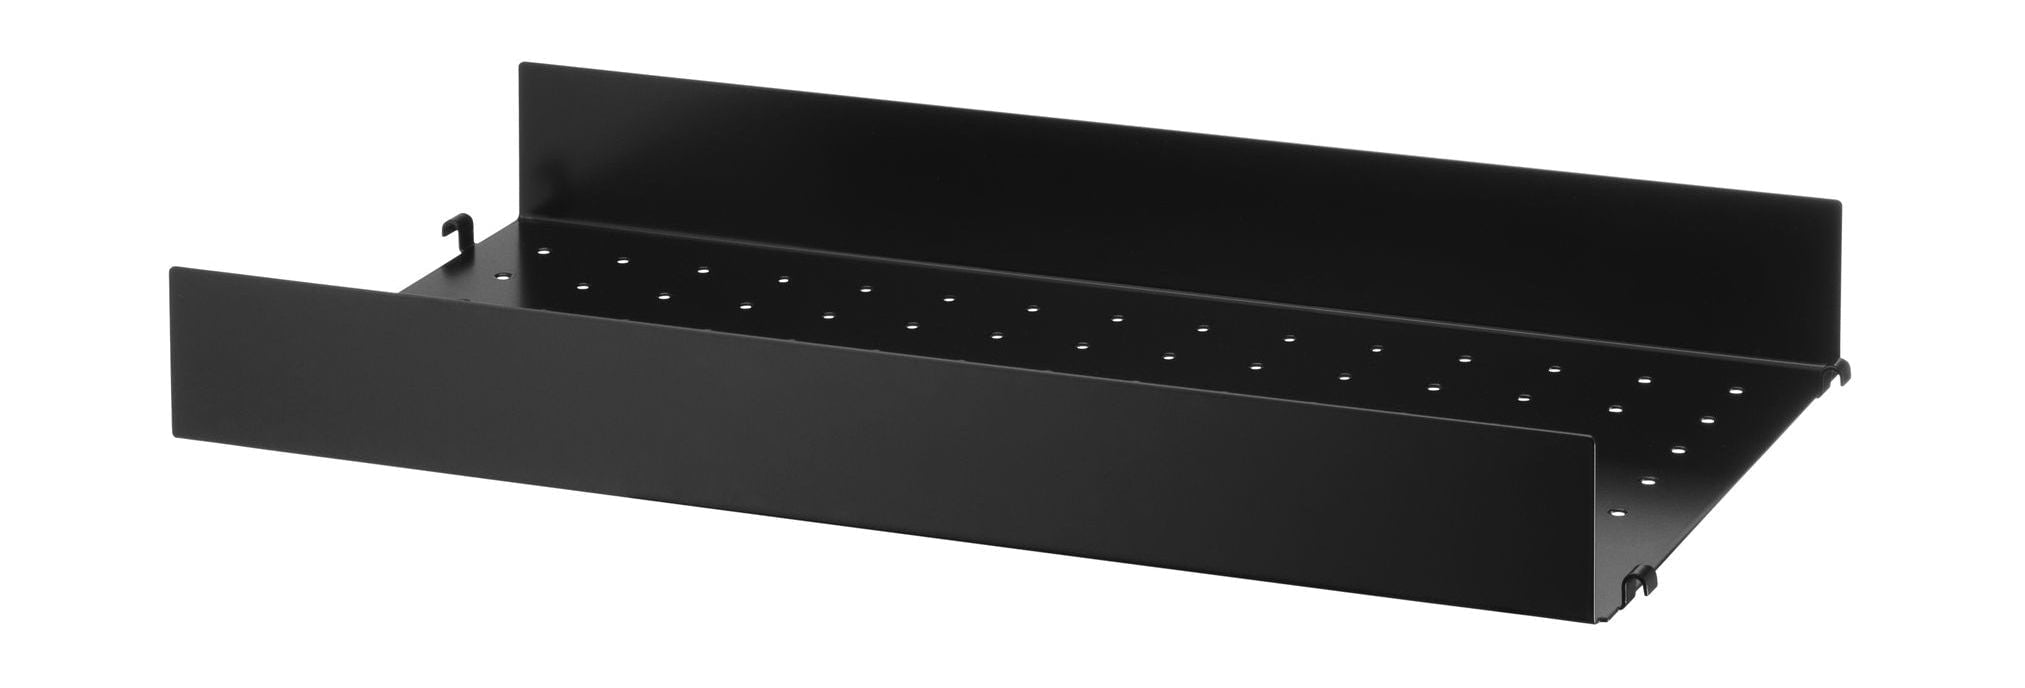 String Furniture String System Metal Shelf With High Edge 30x58 Cm, Black